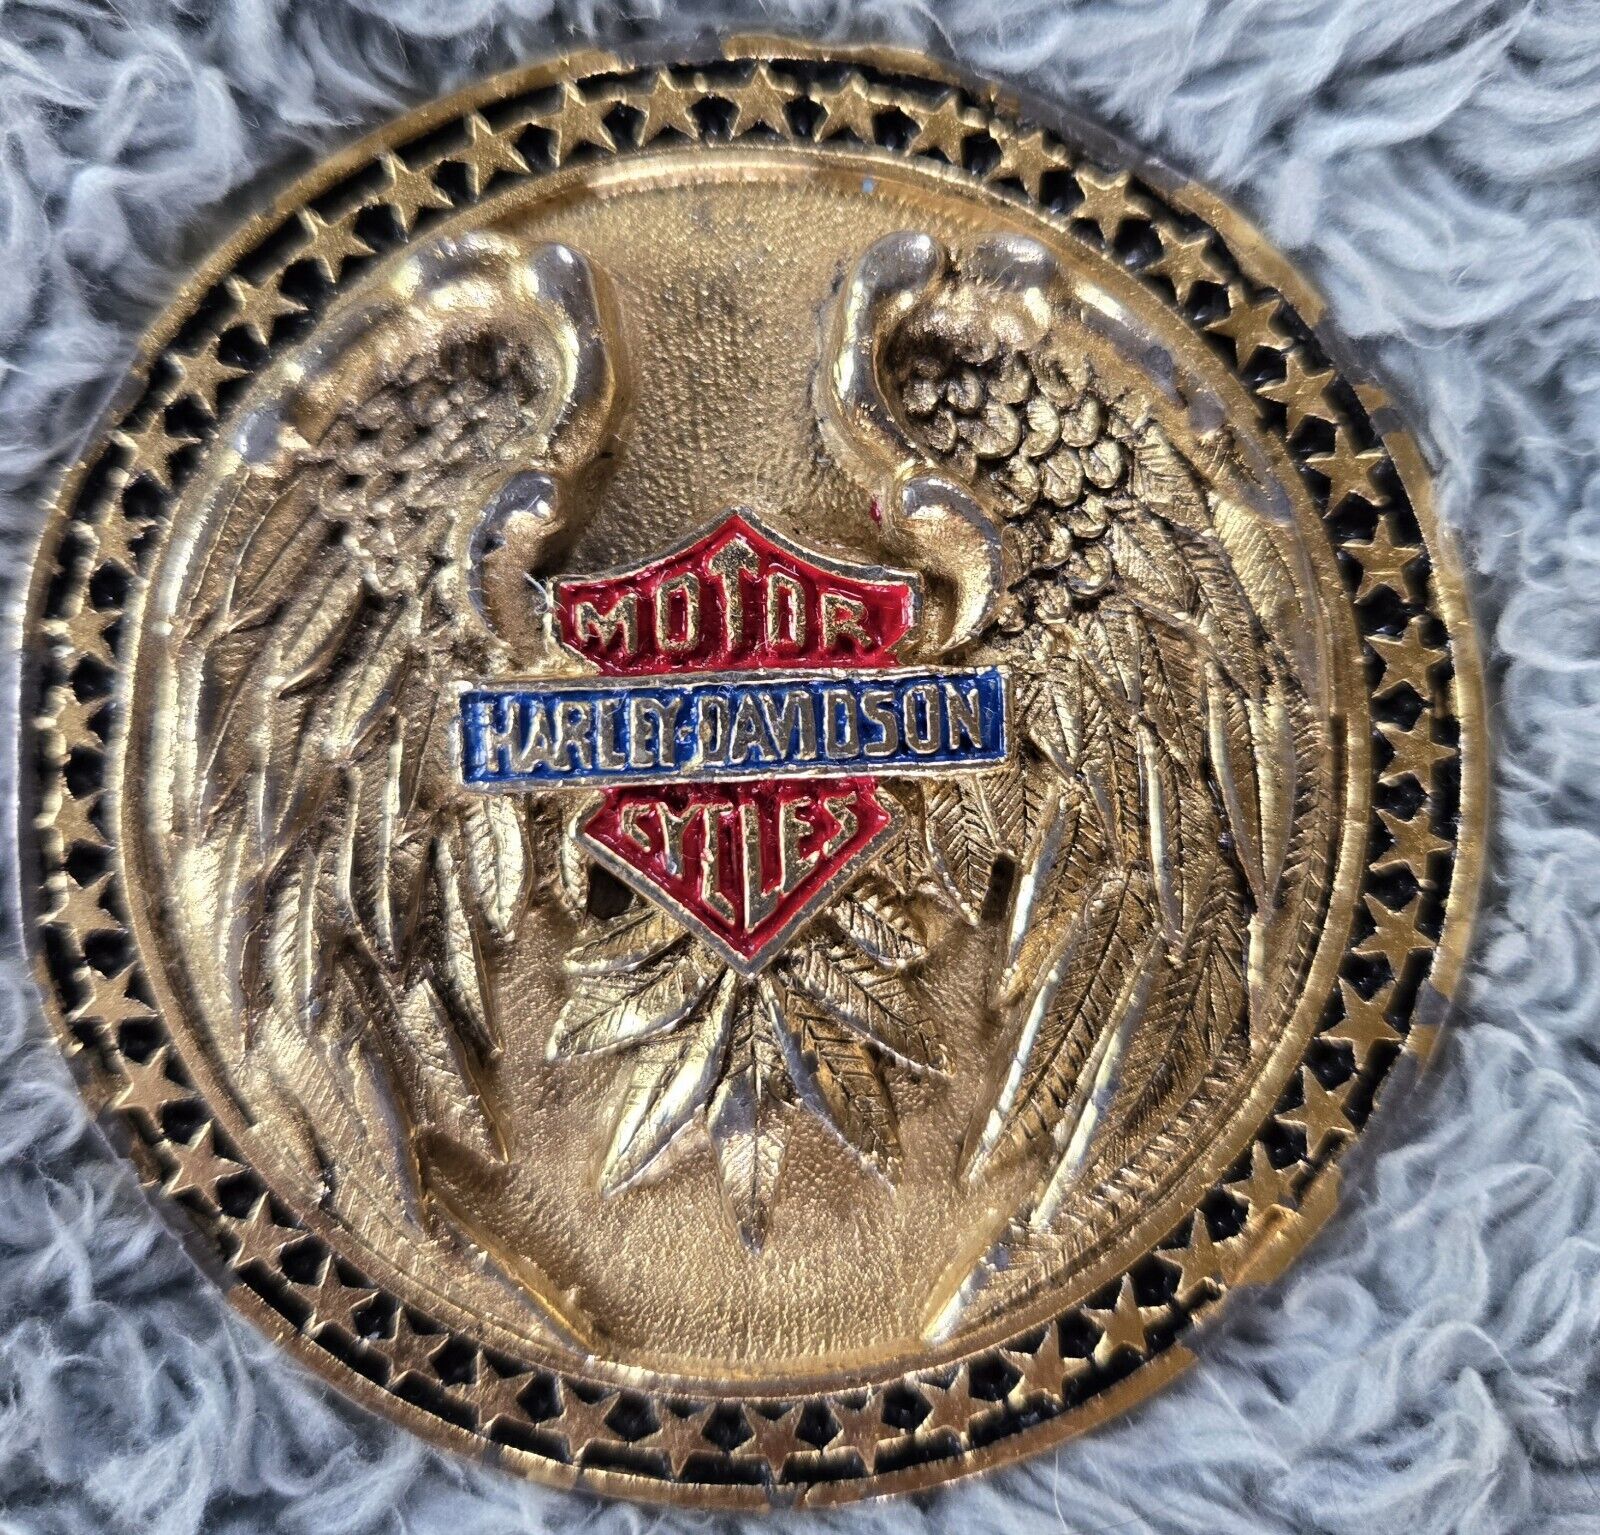 Harley Davidson belt buckle Logo with Wings